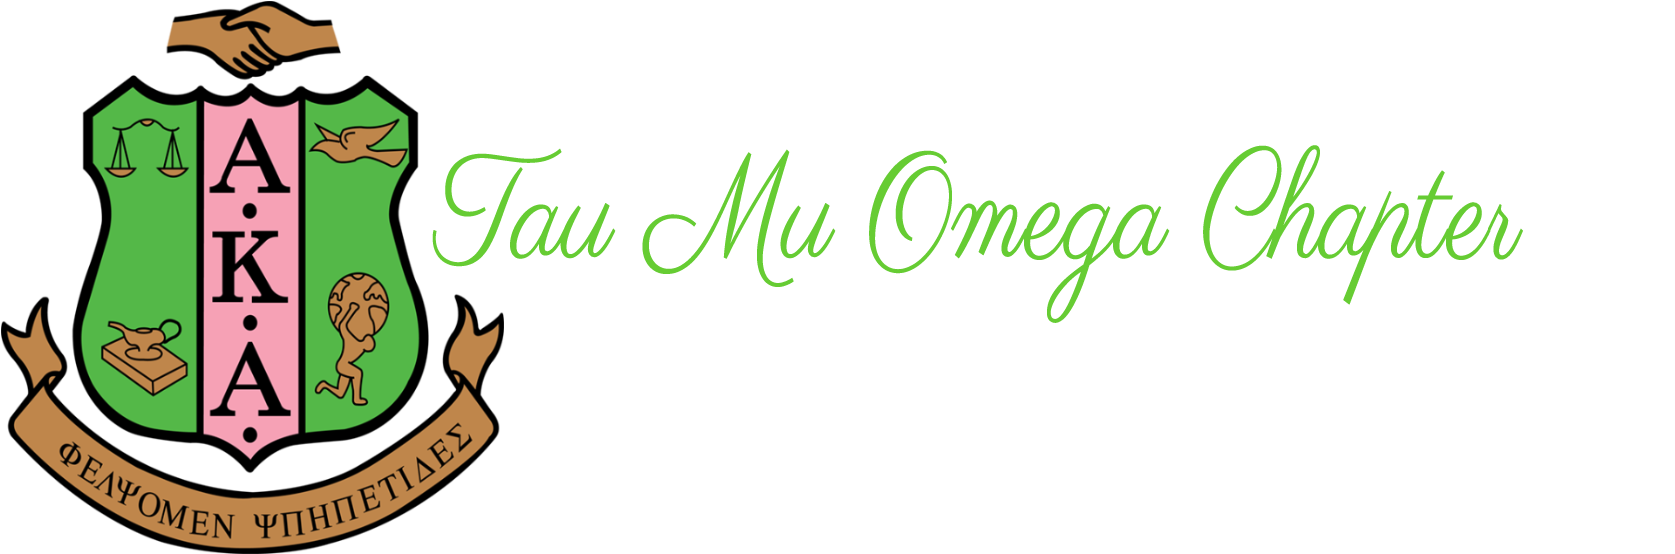 Aka Tau Mu Omega Chapter Logo And Motto - Alpha Kappa Alpha Logo Png (1800x645)